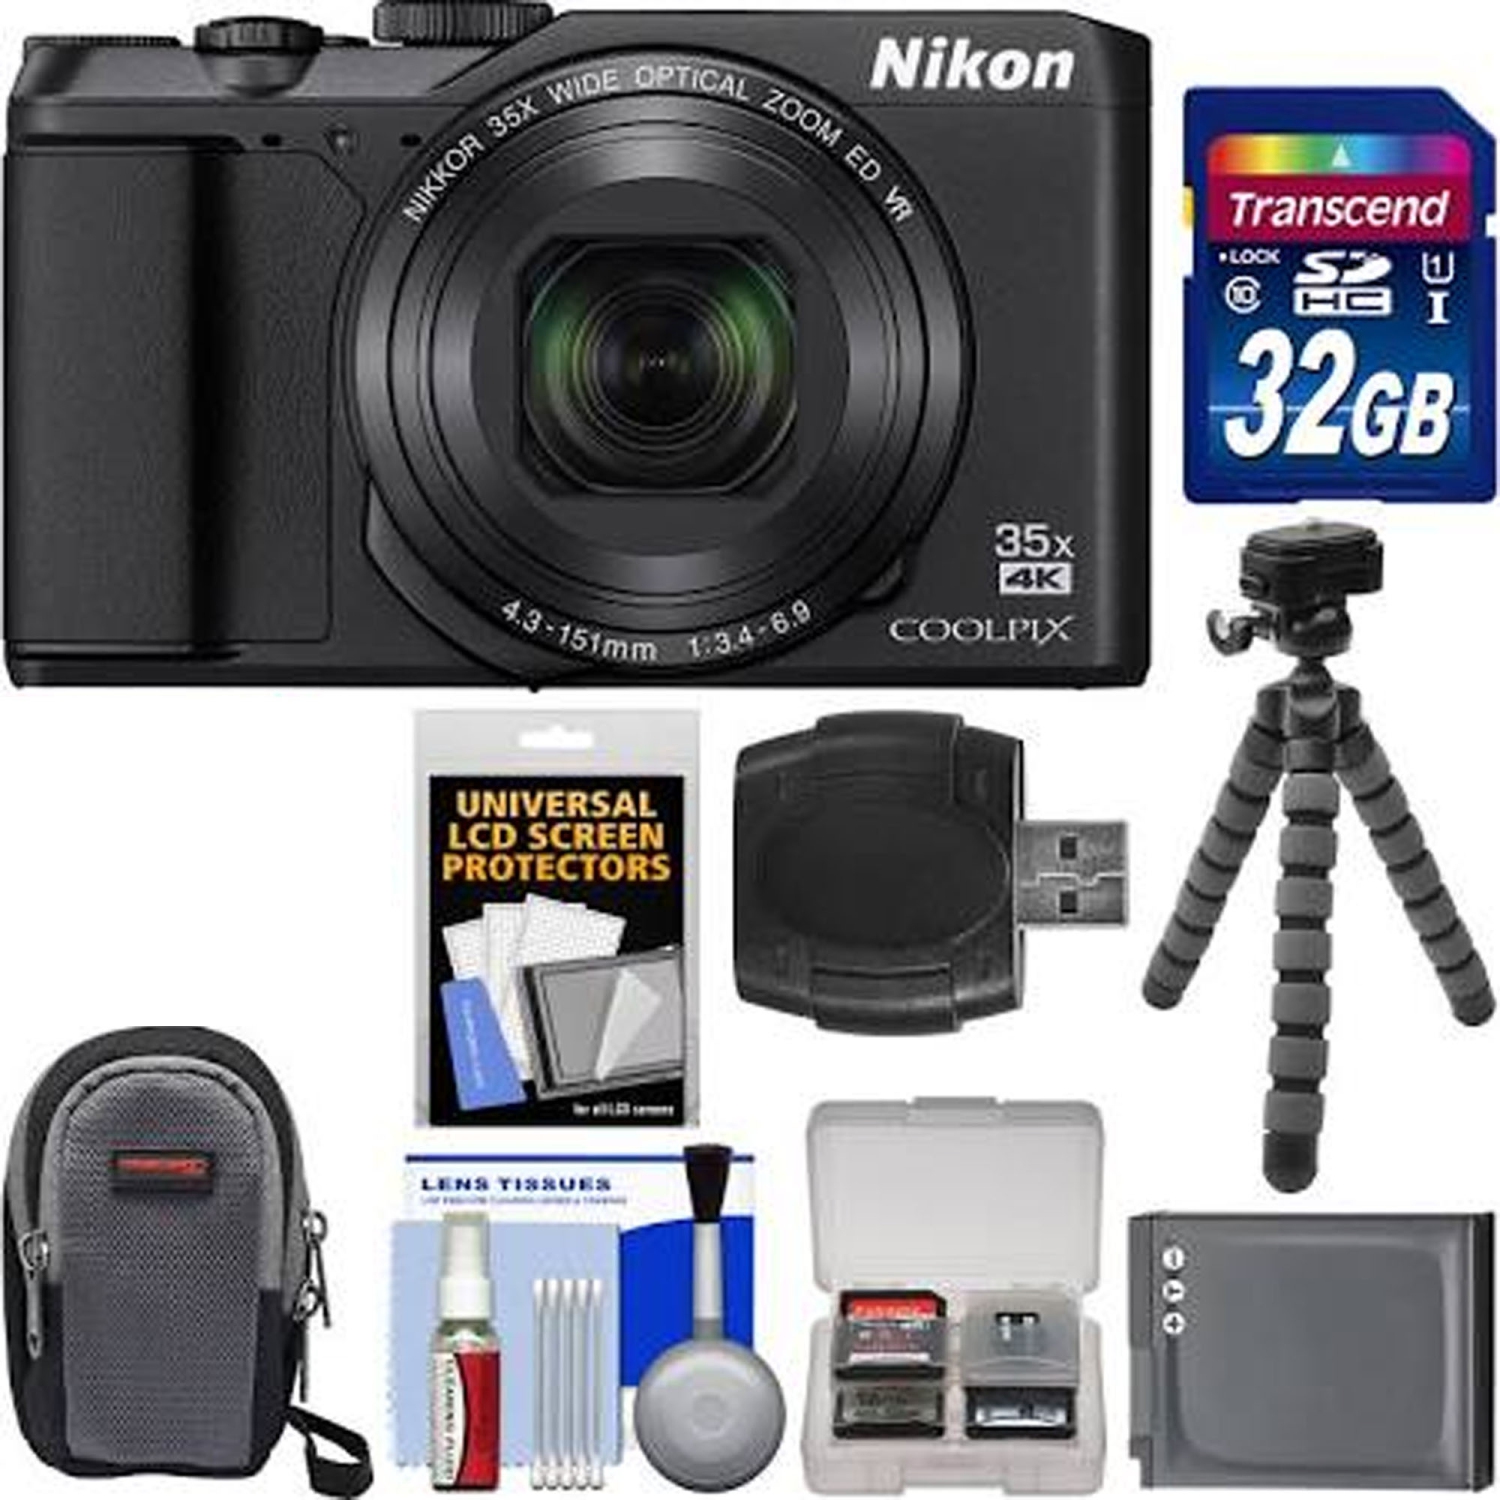 Nikon Coolpix A900 4K Wi-Fi Digital Camera (Black) with 32GB Card + Case + Battery + Flex Tripod + Kit - US Version w/ Seller Warranty